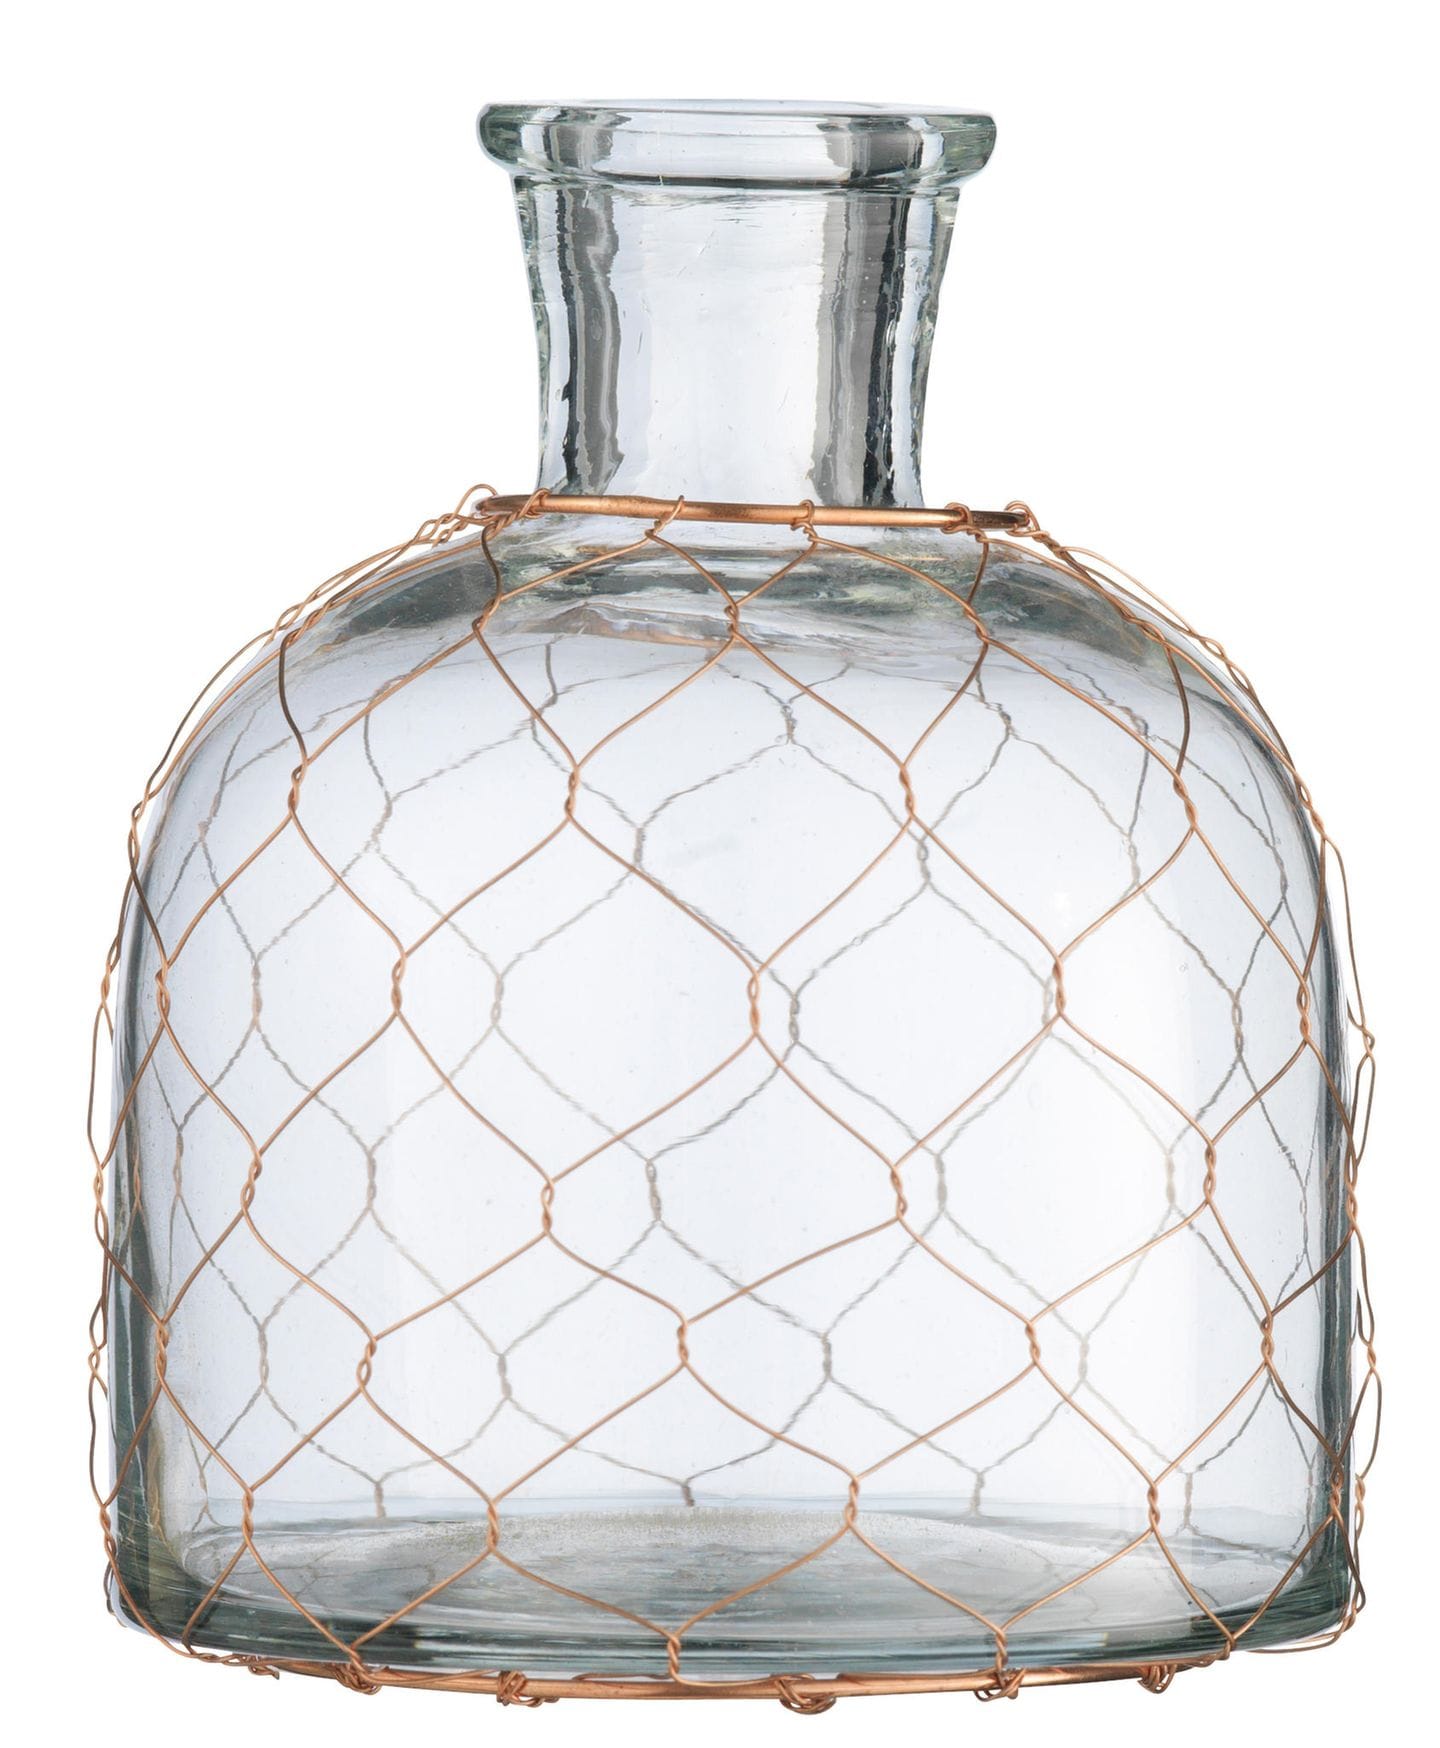 Vase aus Glas mit Draht